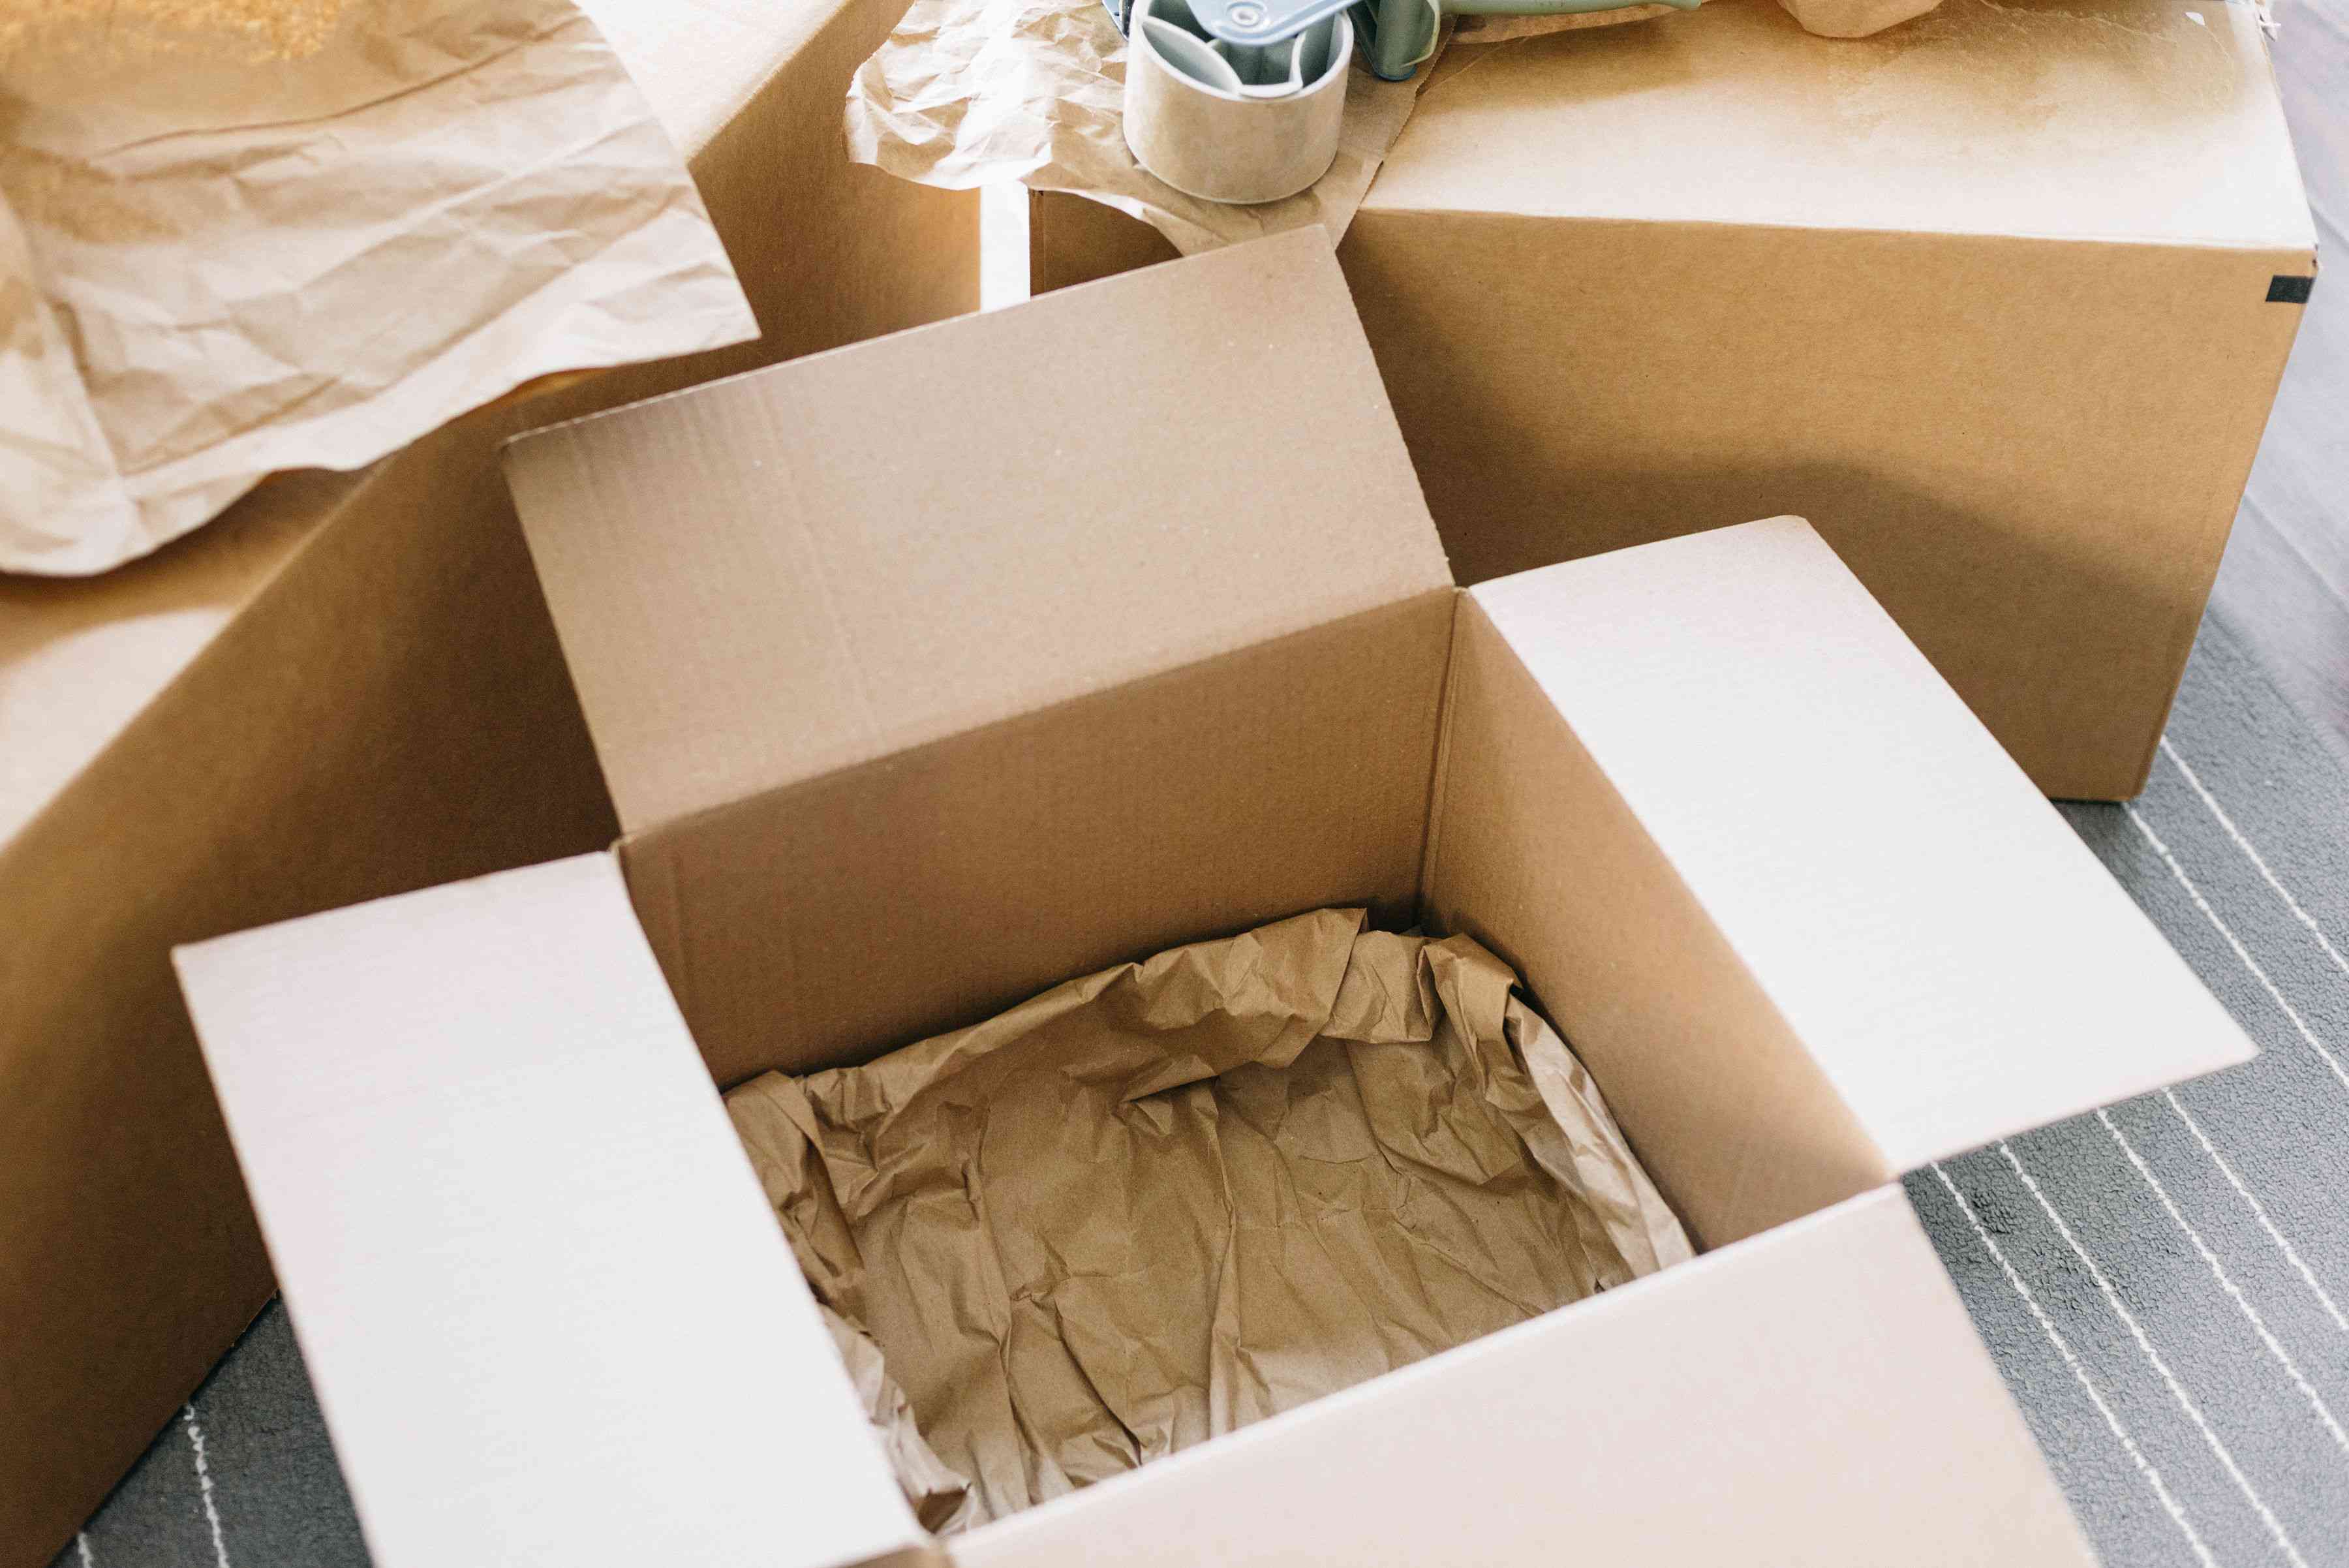 Well packaged. Упаковка вещей. Коробки для упаковки вещей. Коробки для перевоза посуды. Упаковочная бумага в коробке.